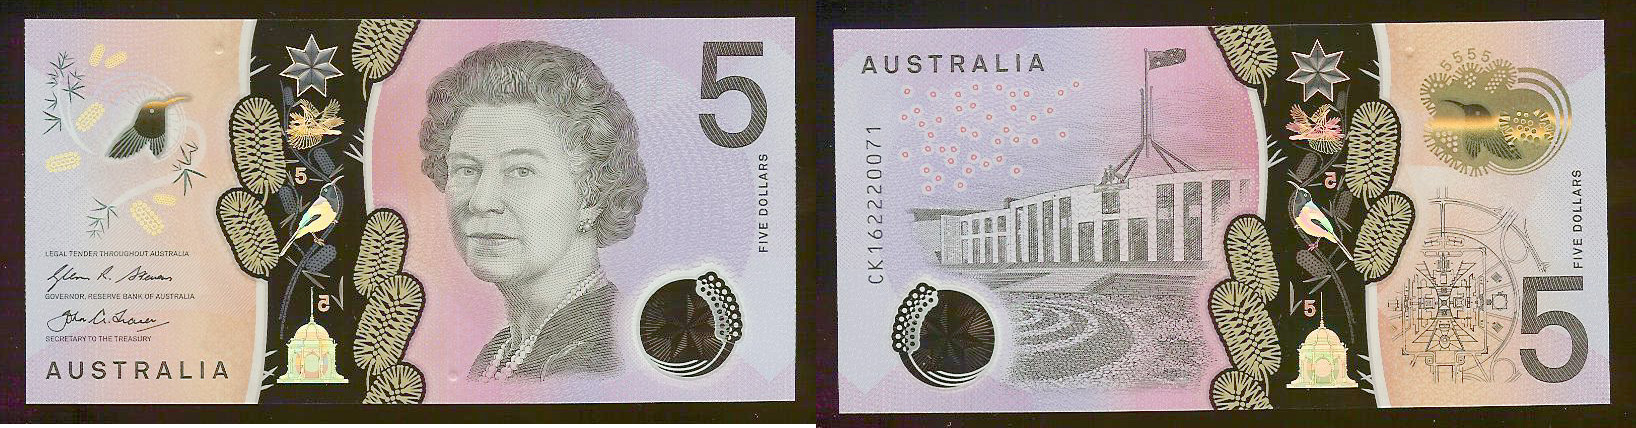 Australian $5 2016 NEW